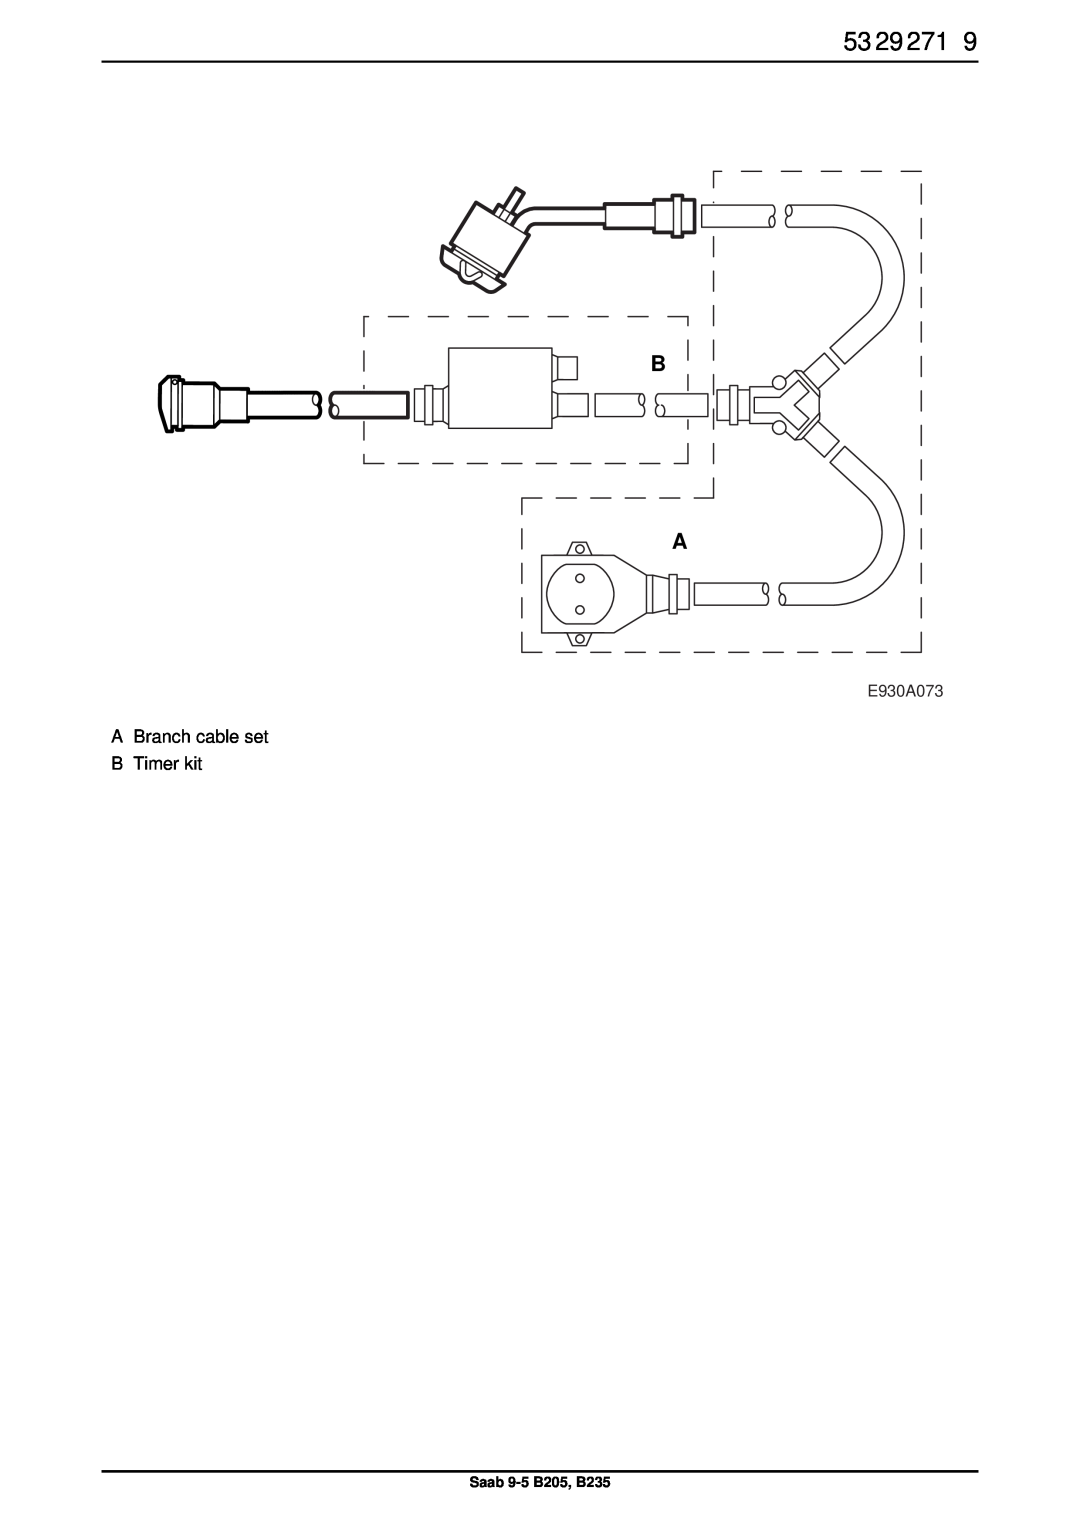 Saab installation instructions A Branch cable set B Timer kit, E930A073, Saab 9-5 B205, B235 